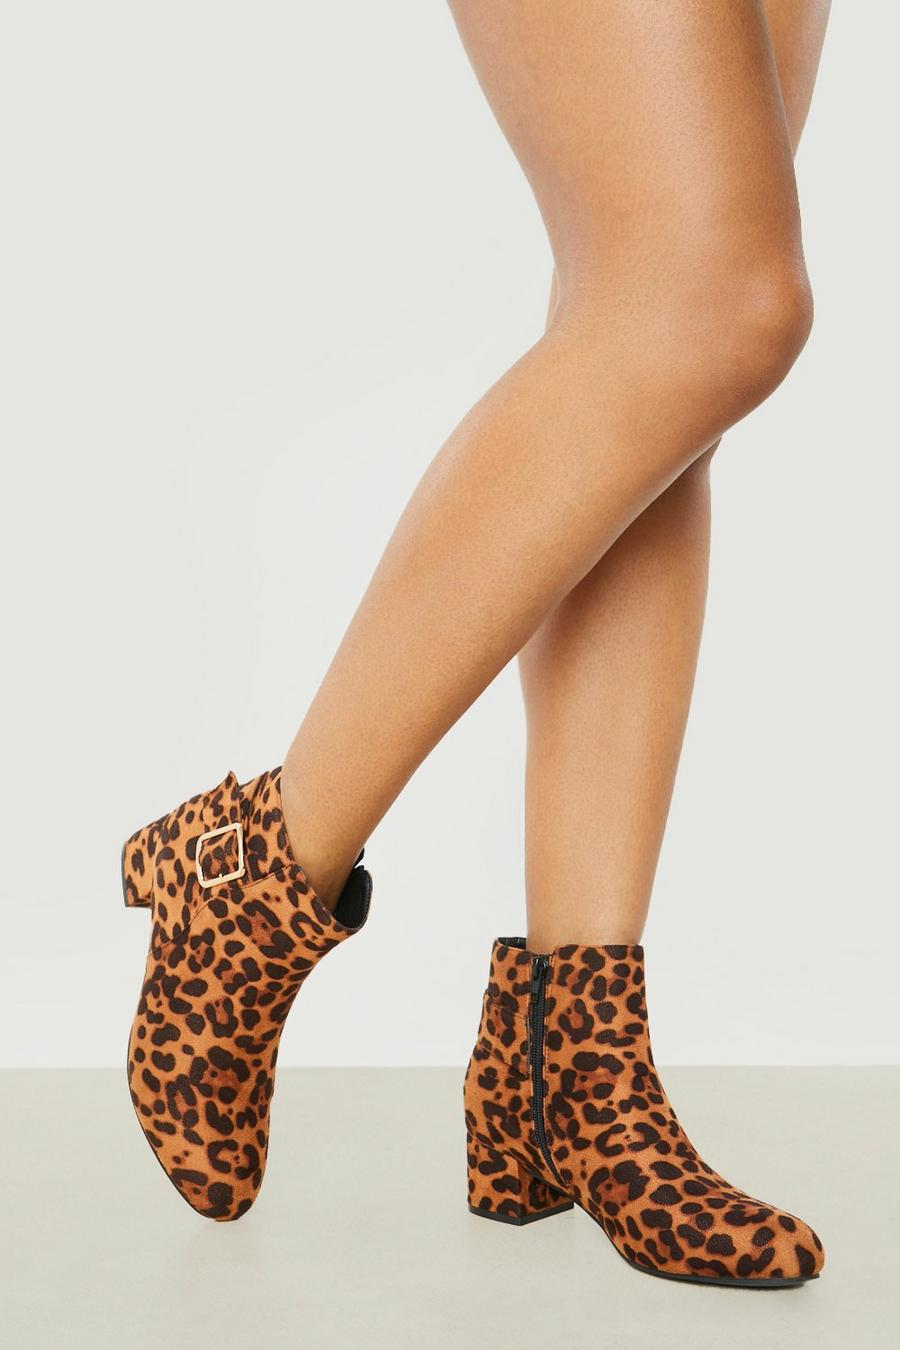 Leopard wrap dress and light brown suede heels